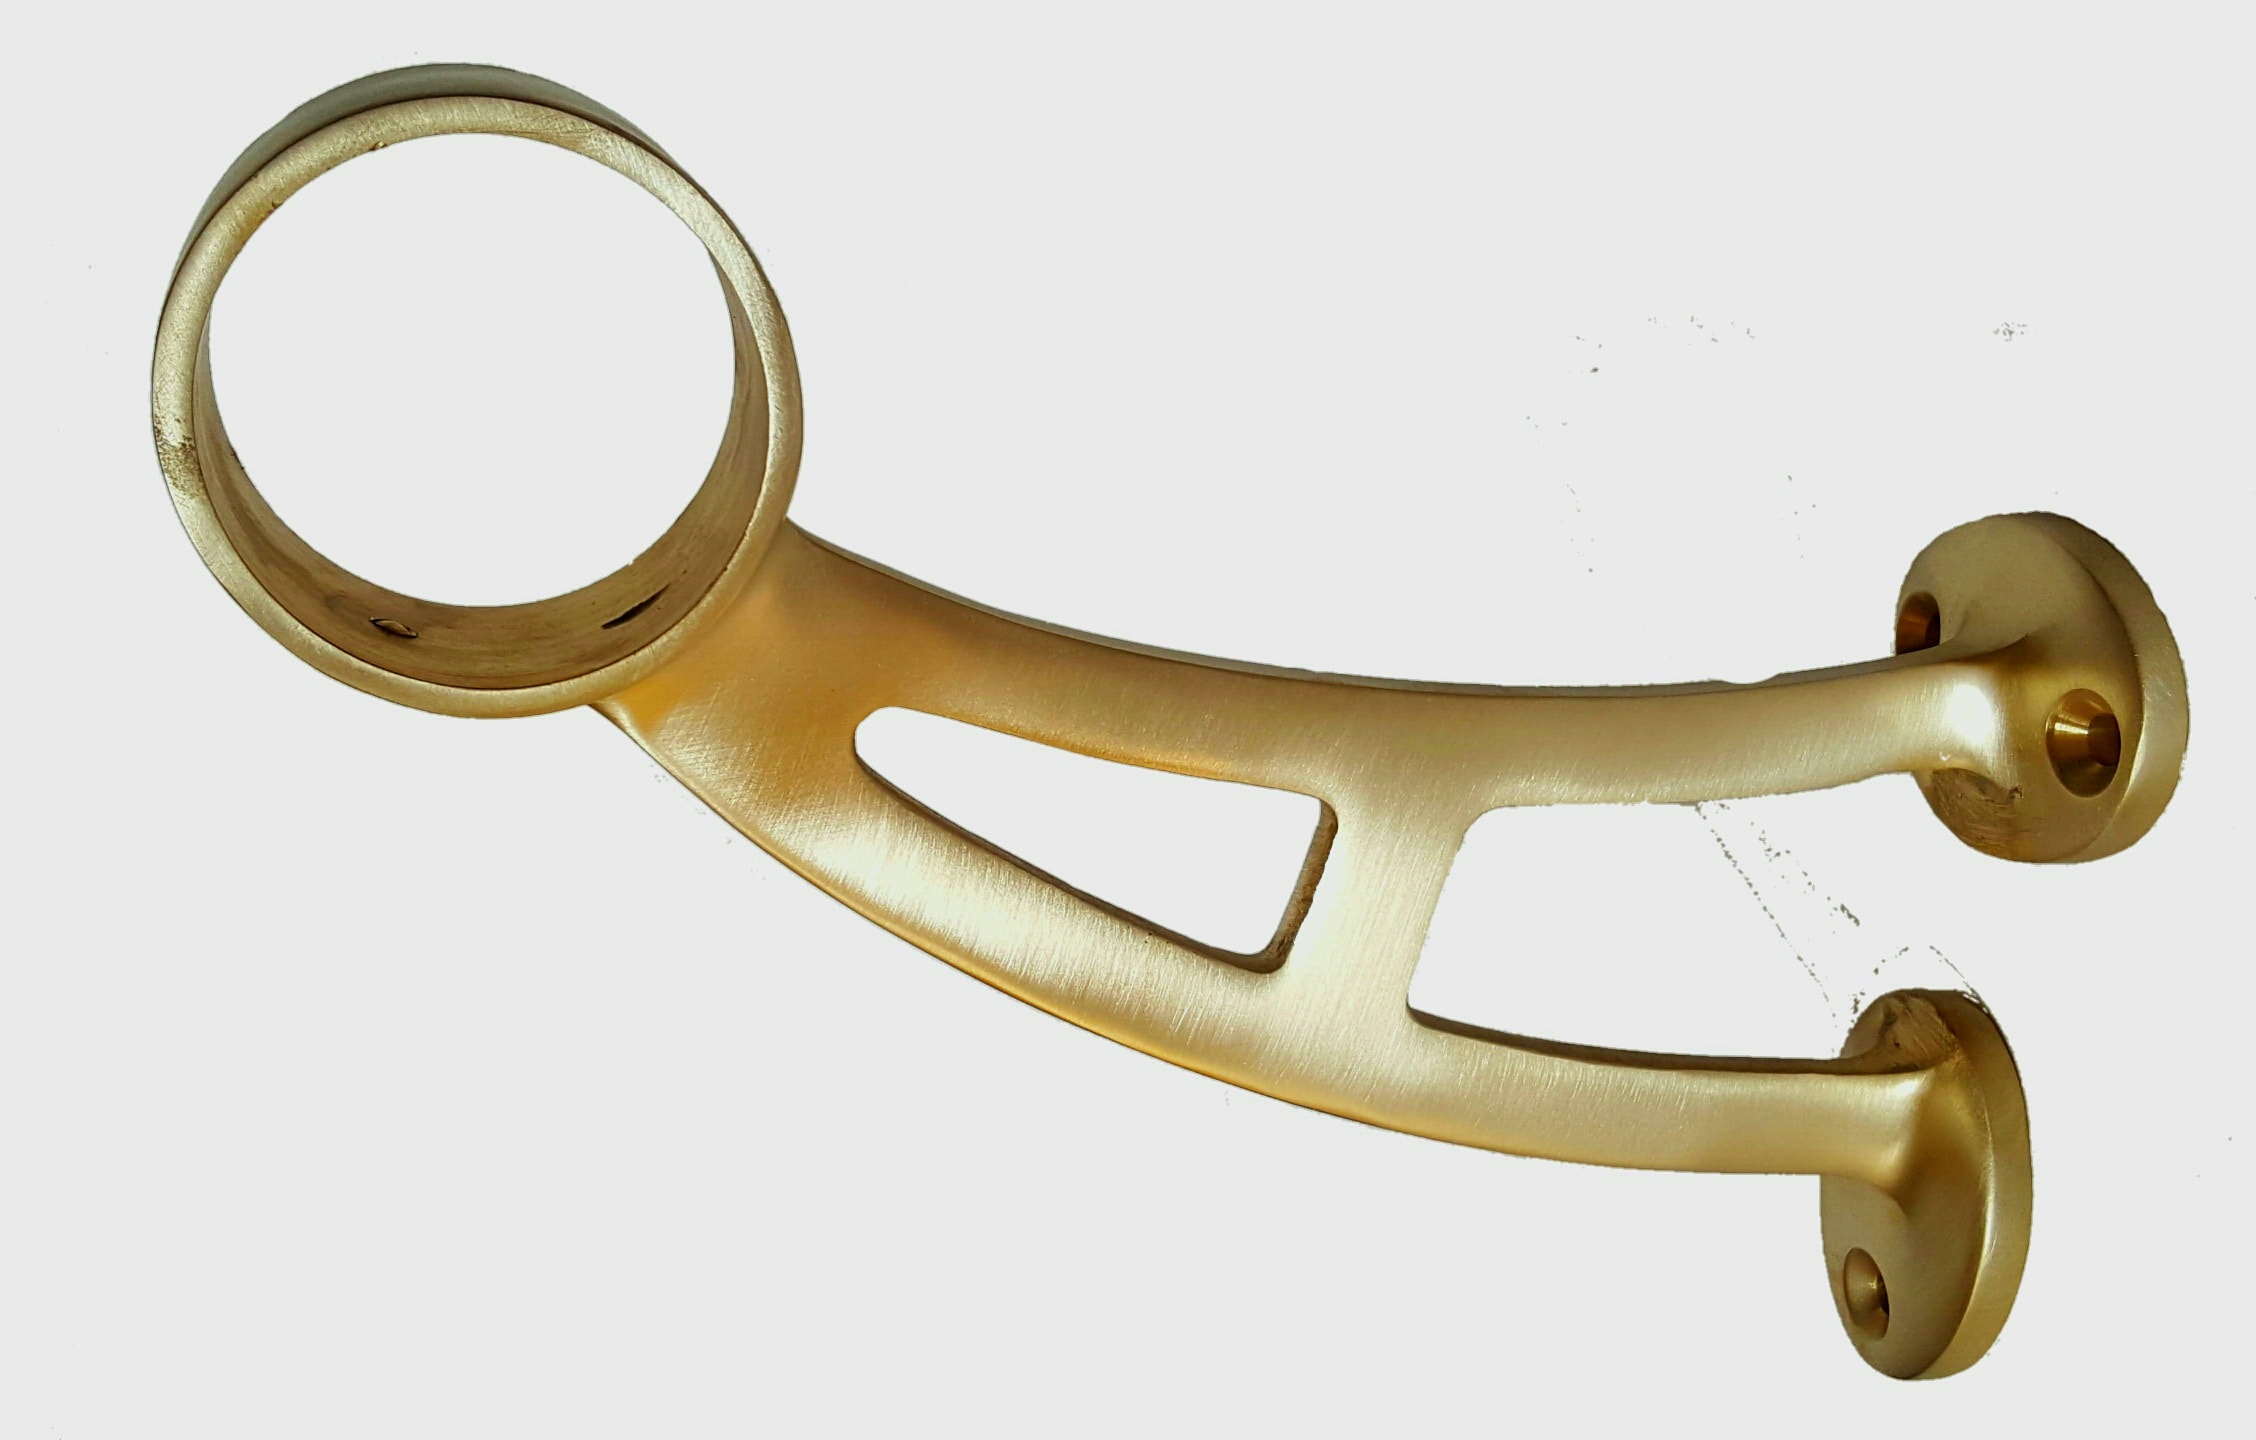 6 Foot Long Bar Foot Rail Kit in Polished Brass– Trade Diversified